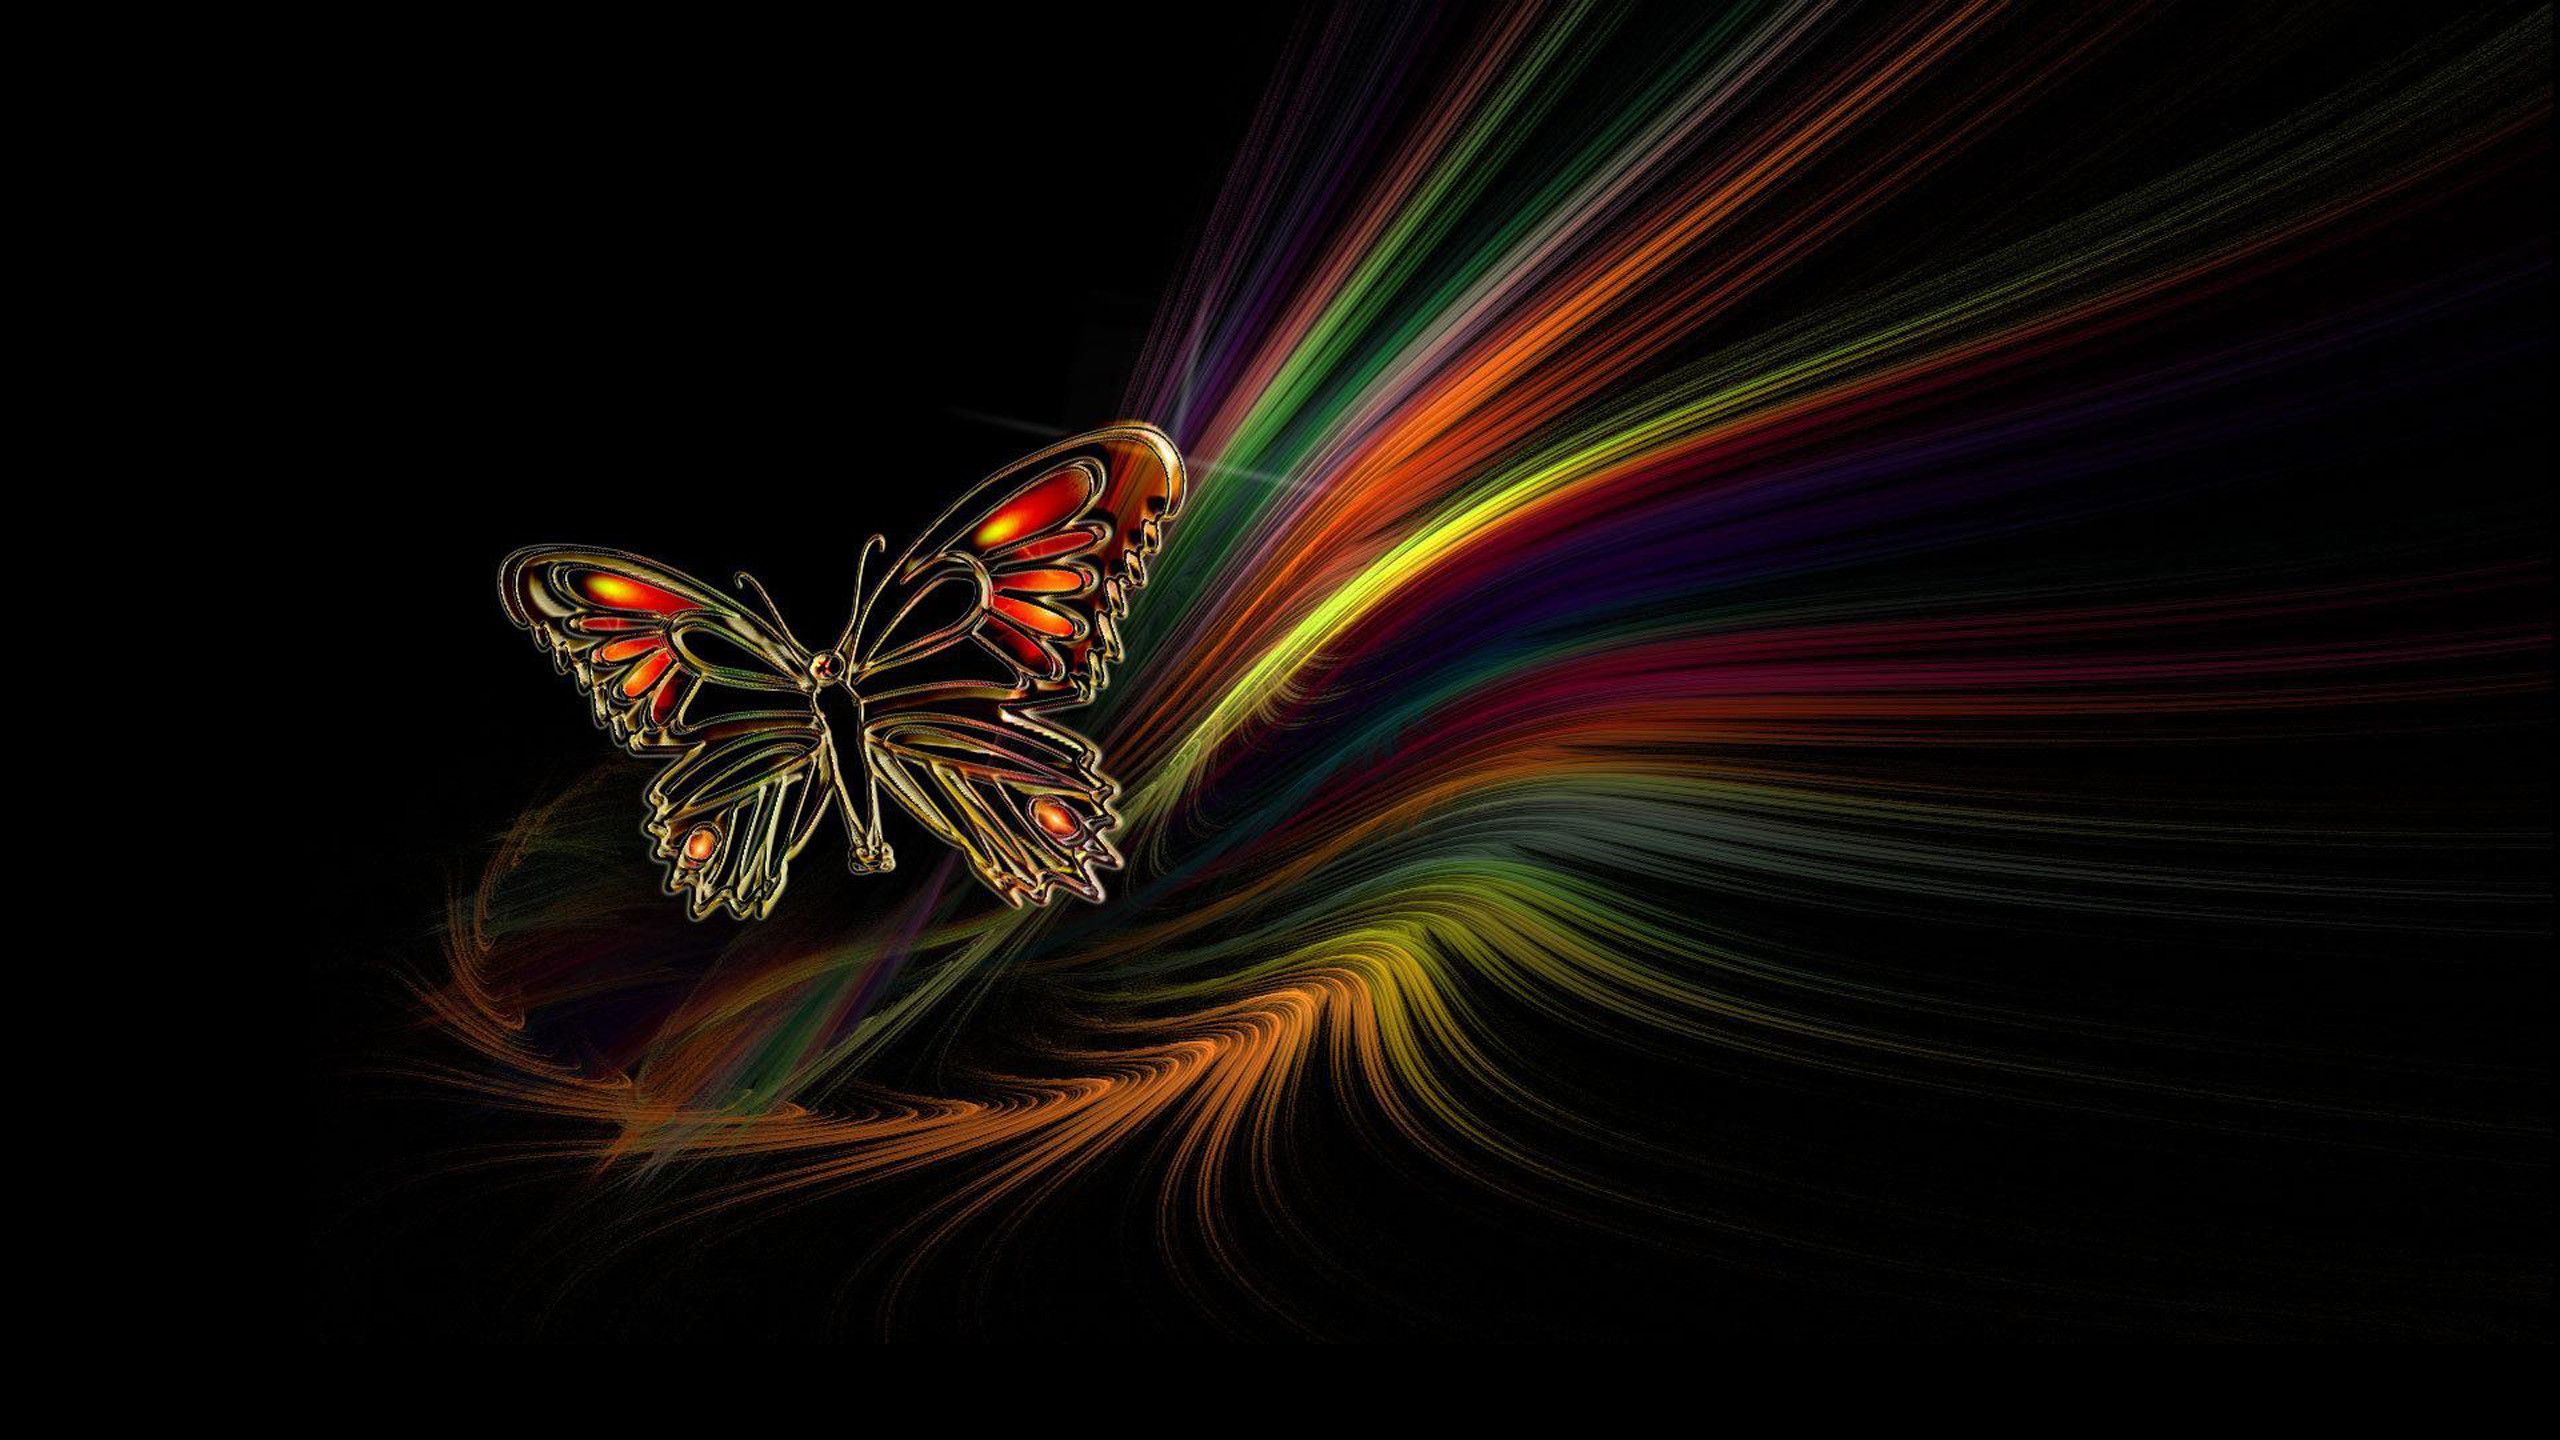 Butterfly Wallpaper Desktop background picture